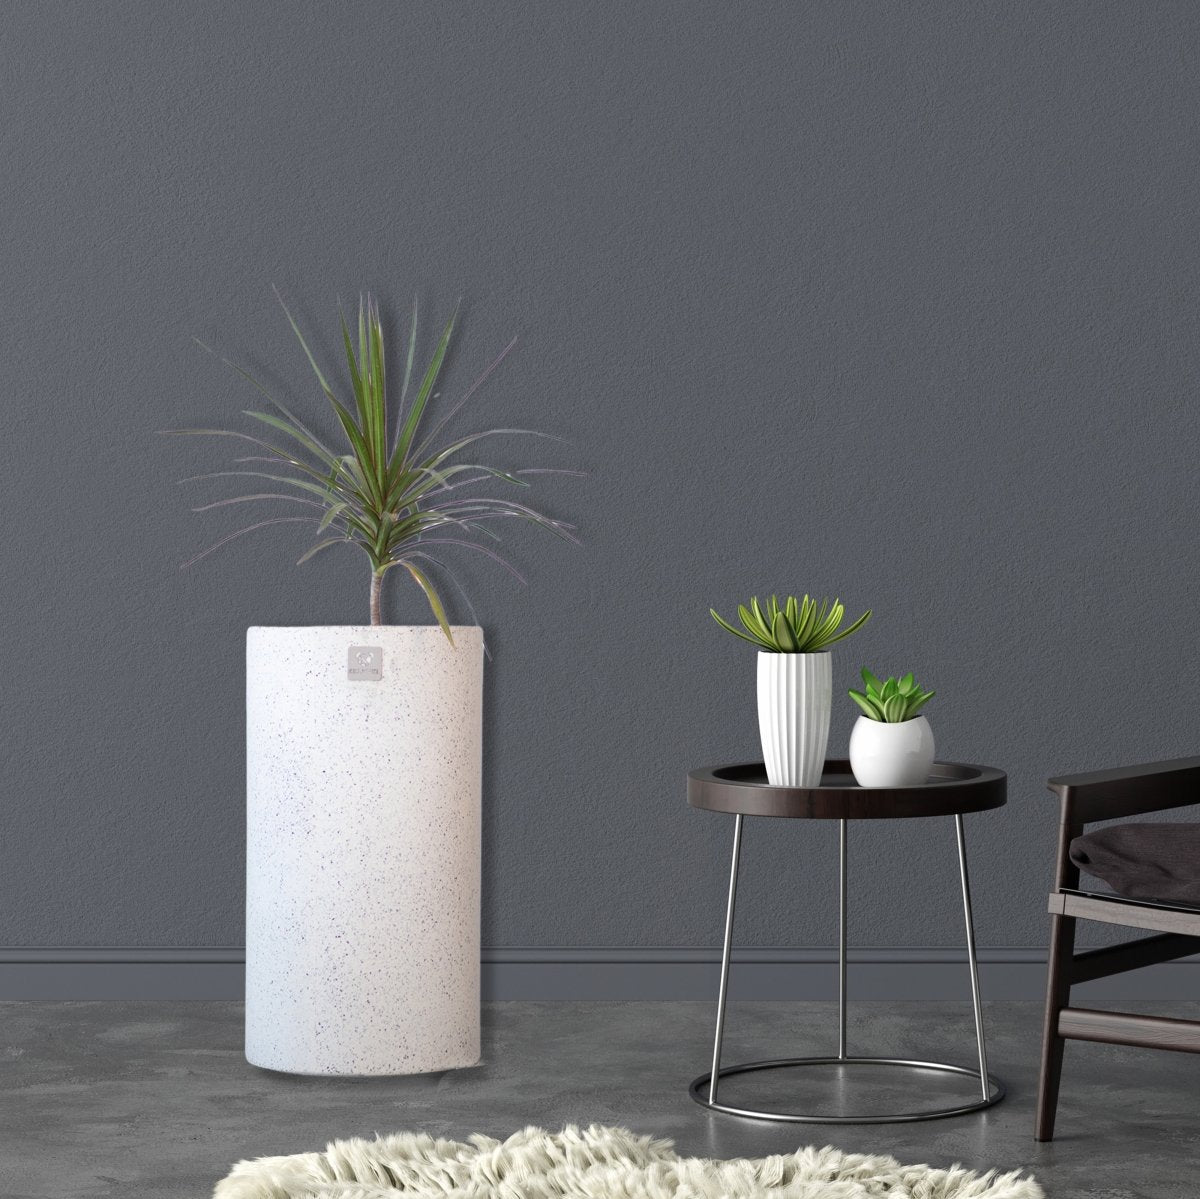 Kezevel Indoor Outdoor FRP Planters - Lightweight Durable Matte White Stone Finish Cylindrical Flower Pot, Garden Planter